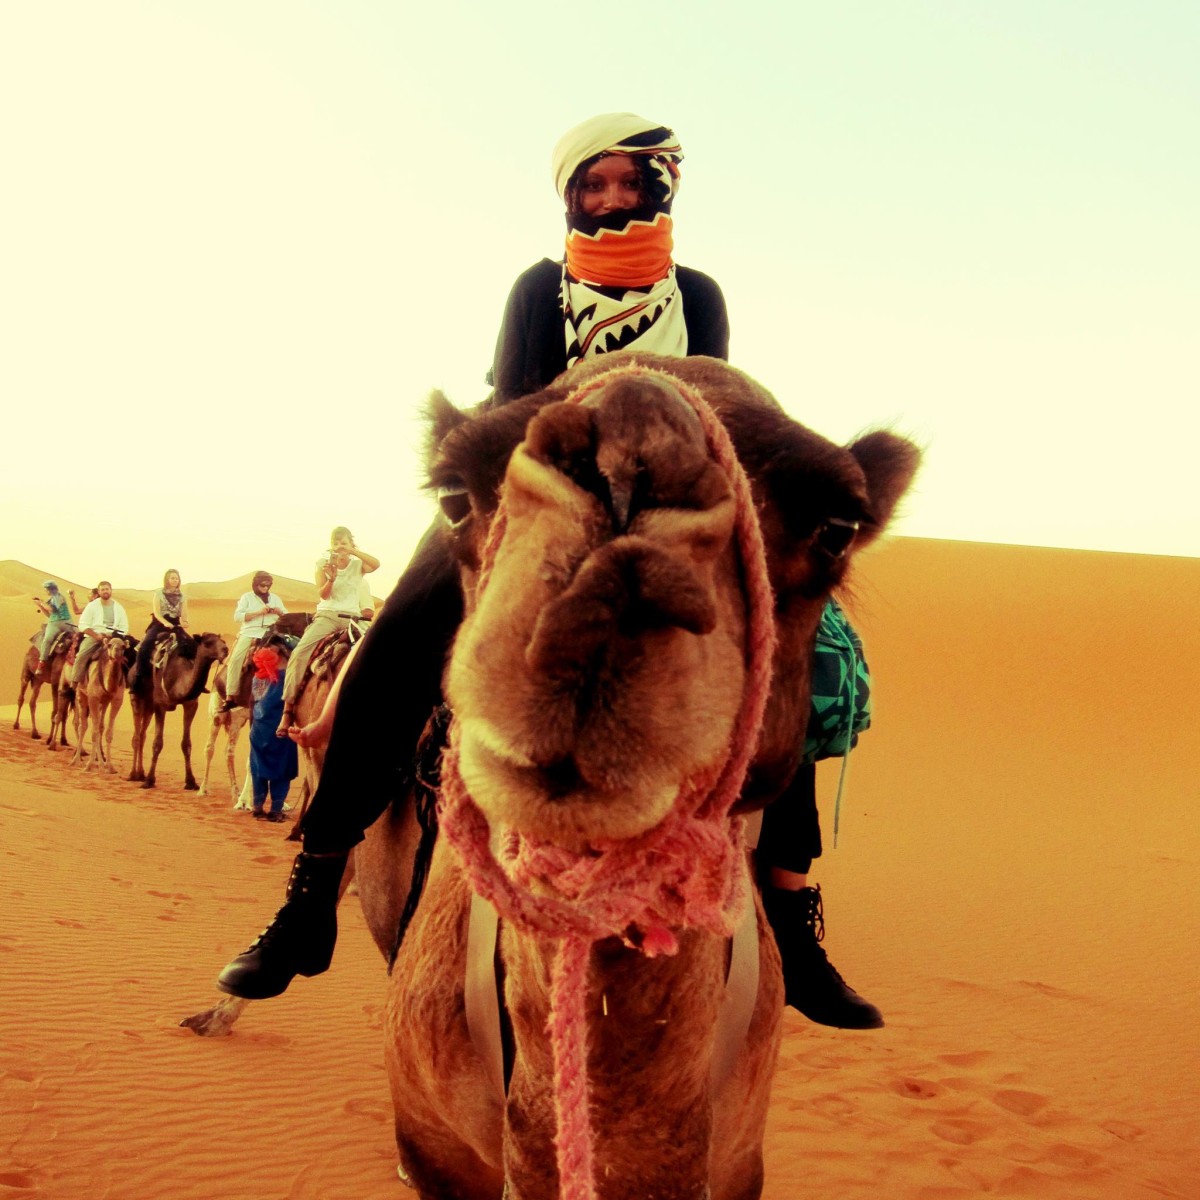 Khadijat Oseni-Ride A Camel-Jetsetterproblems.com